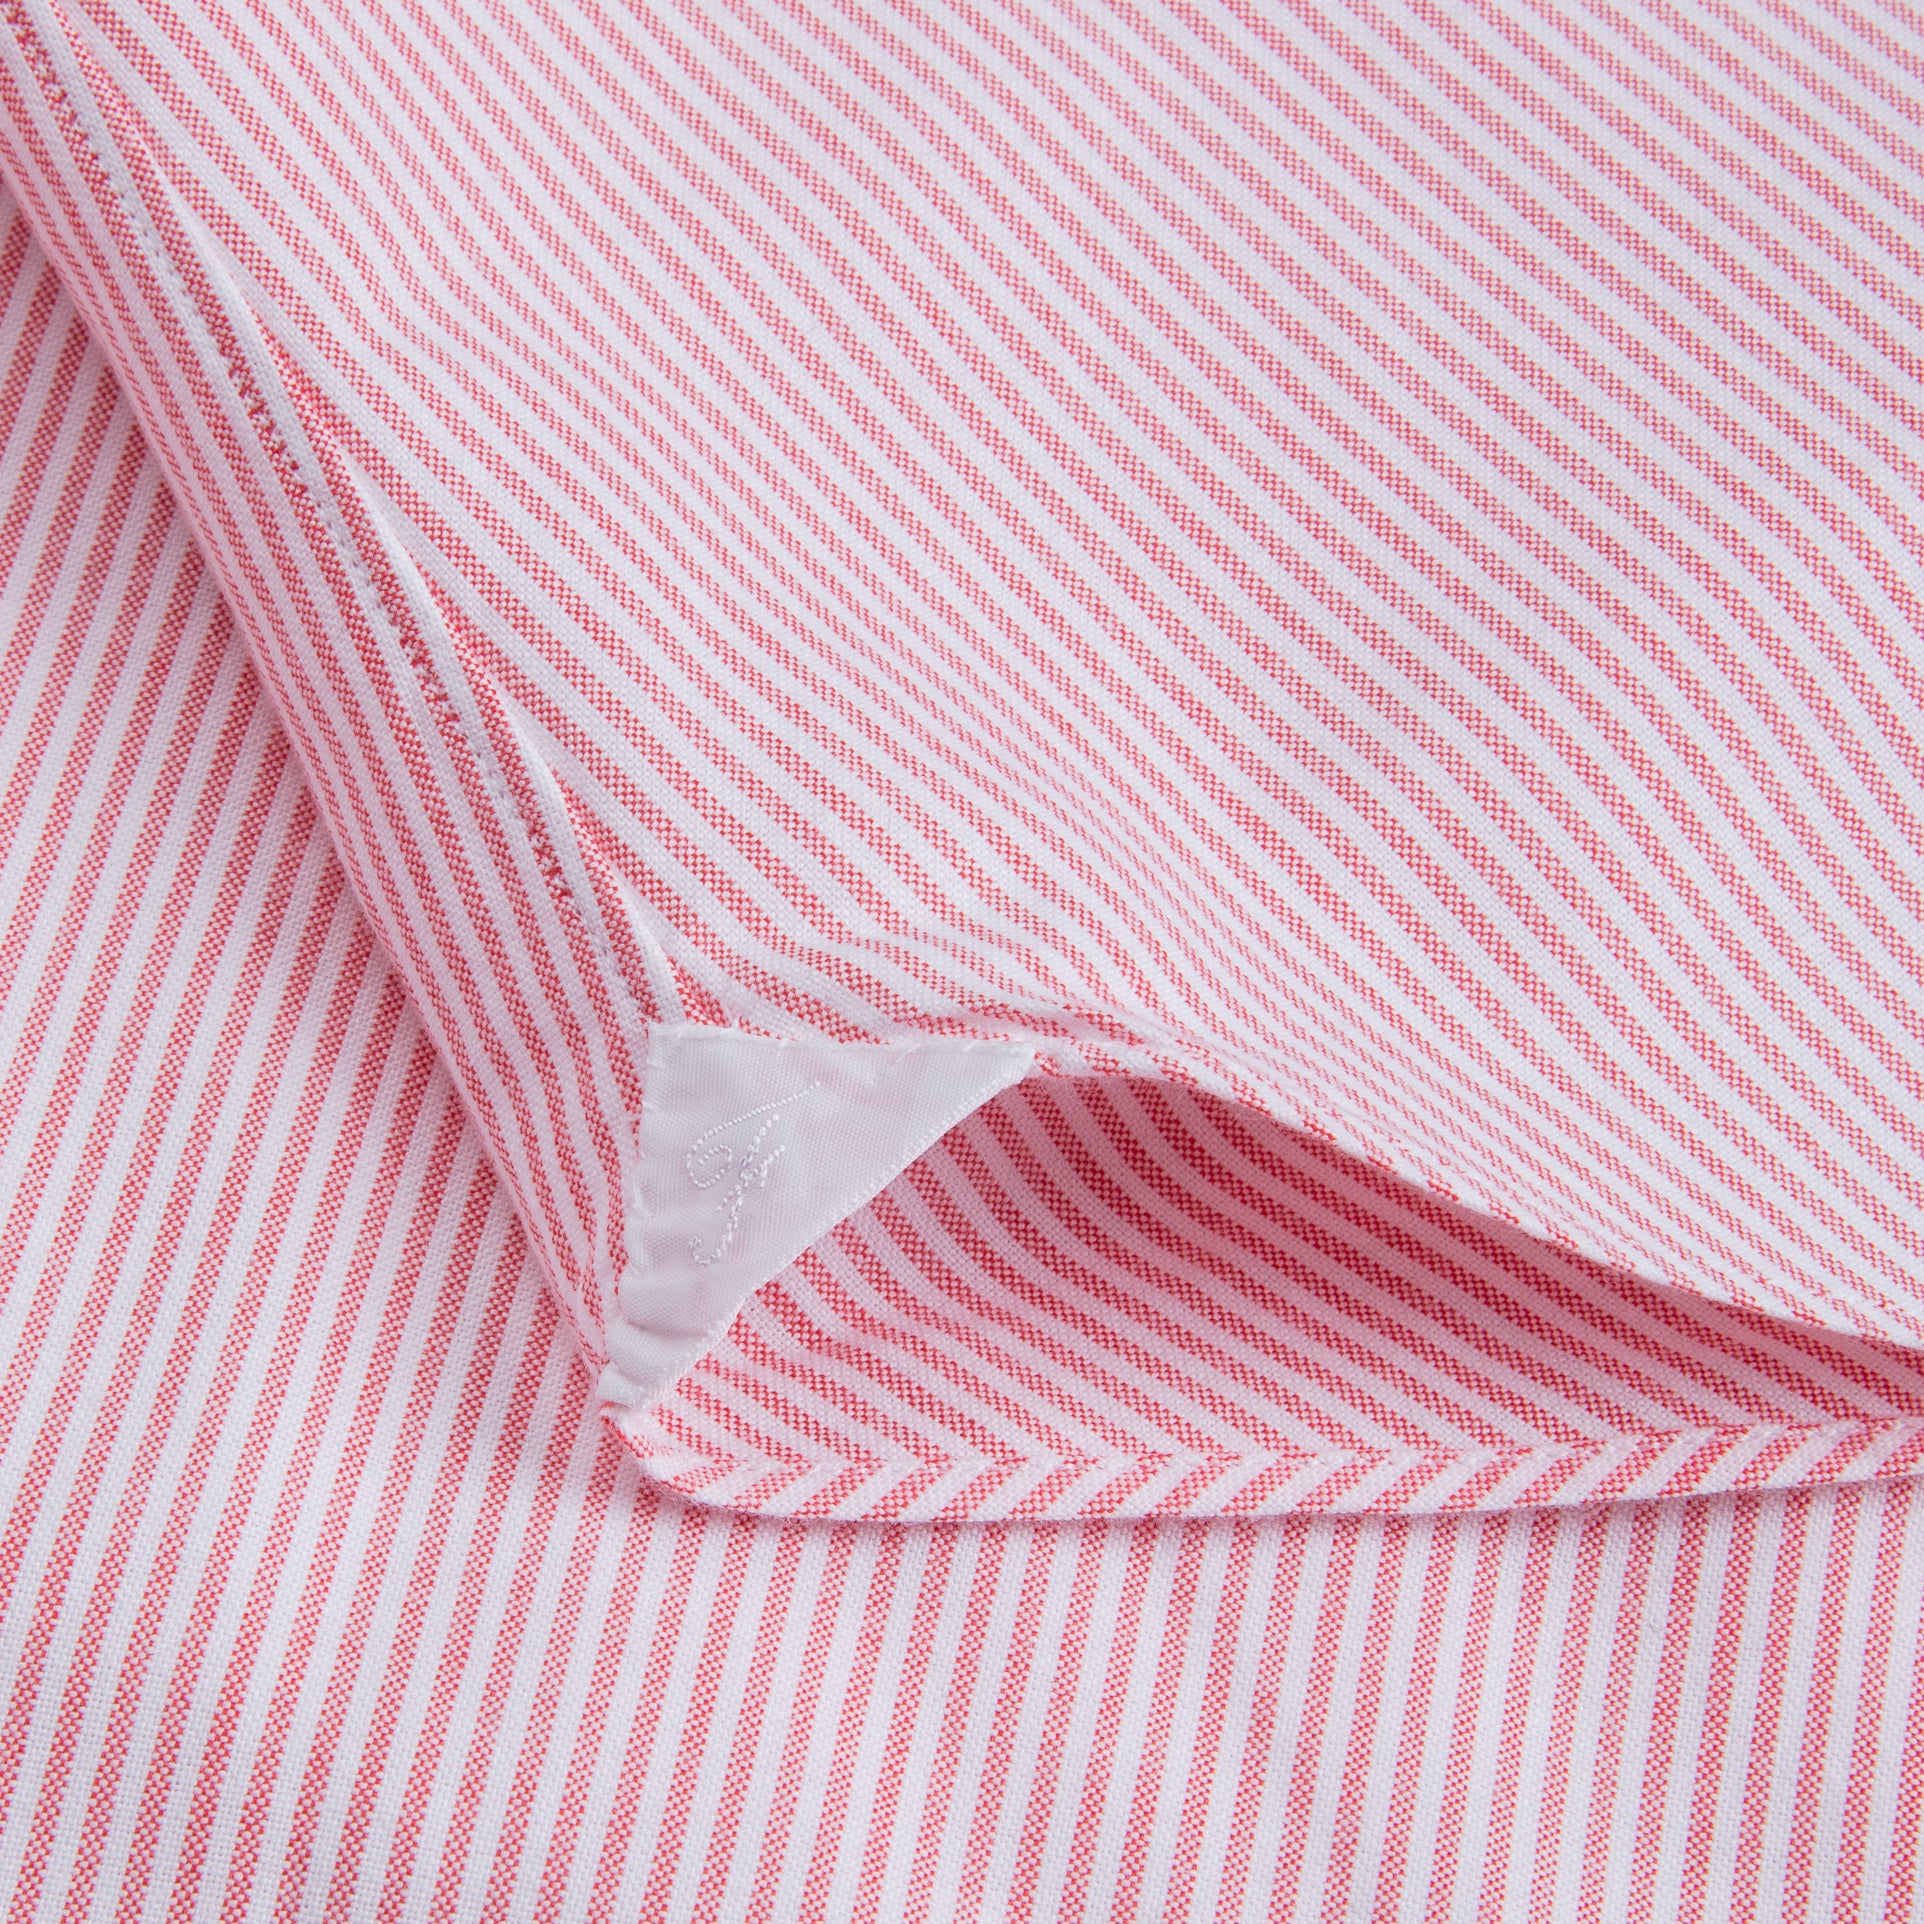 Finamore Tokyo Shirt Pinpoint Oxford Lucio collar Pink Stripe